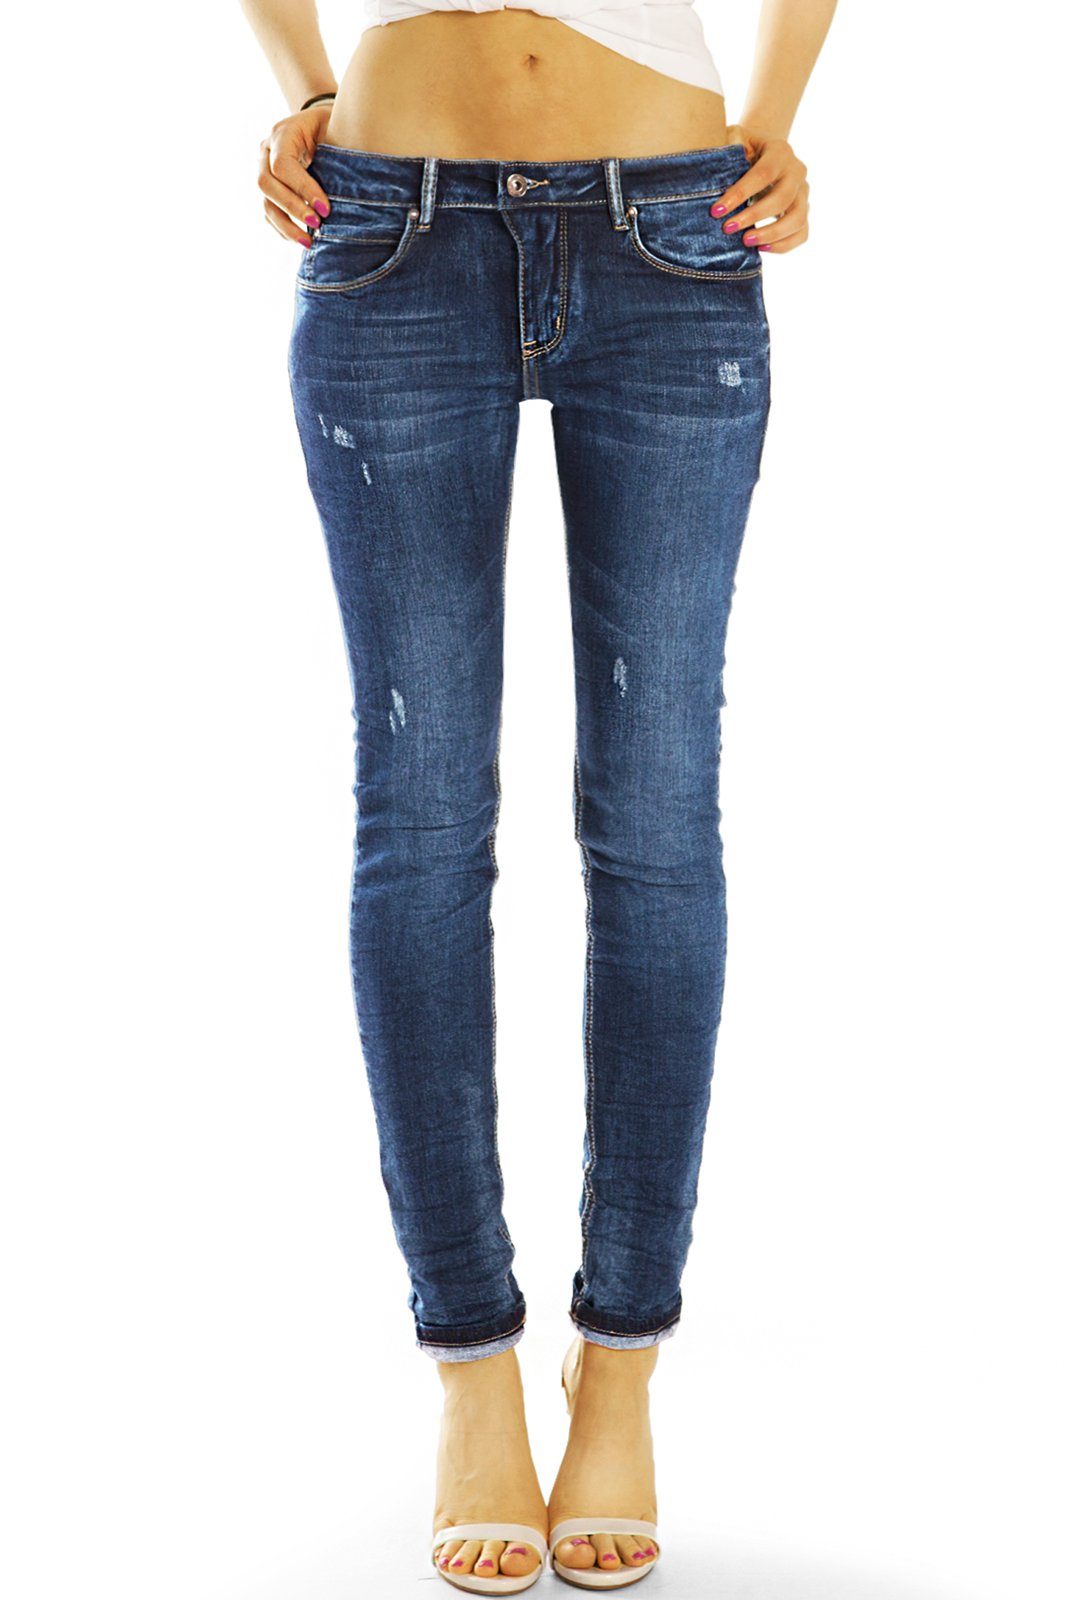 be styled Low-rise-Jeans »Skinny Röhrenjeans Stretch Fit in dunkelblau  medium / low waist Hosen - Damen - j55L« mit Stretch Anteil, 5 Pocket Style  online kaufen | OTTO